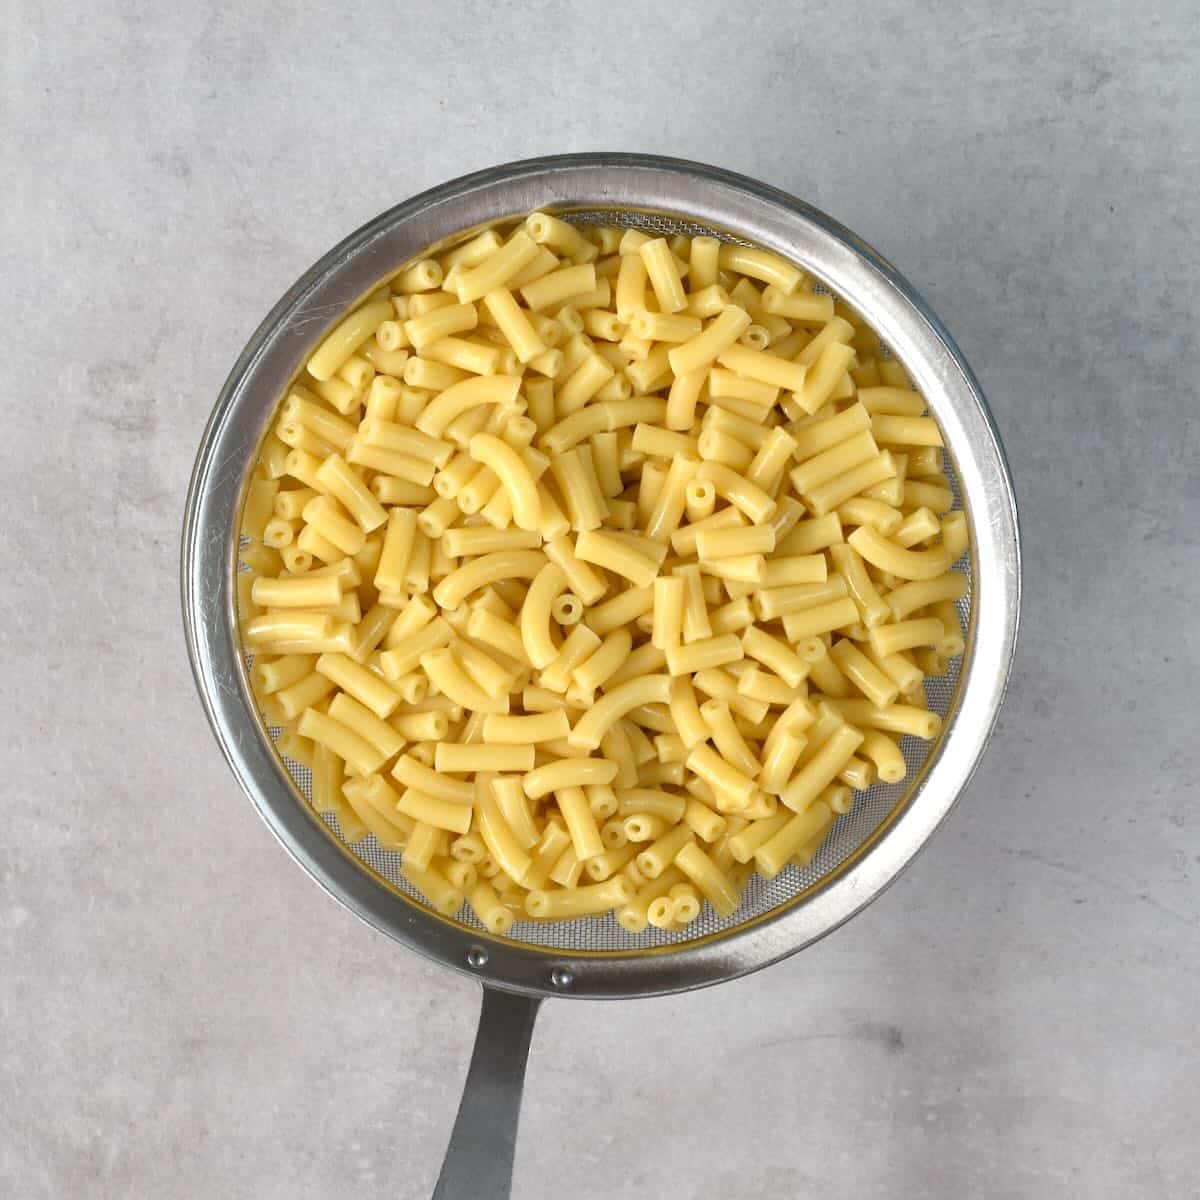 Cooked macaroni pasta